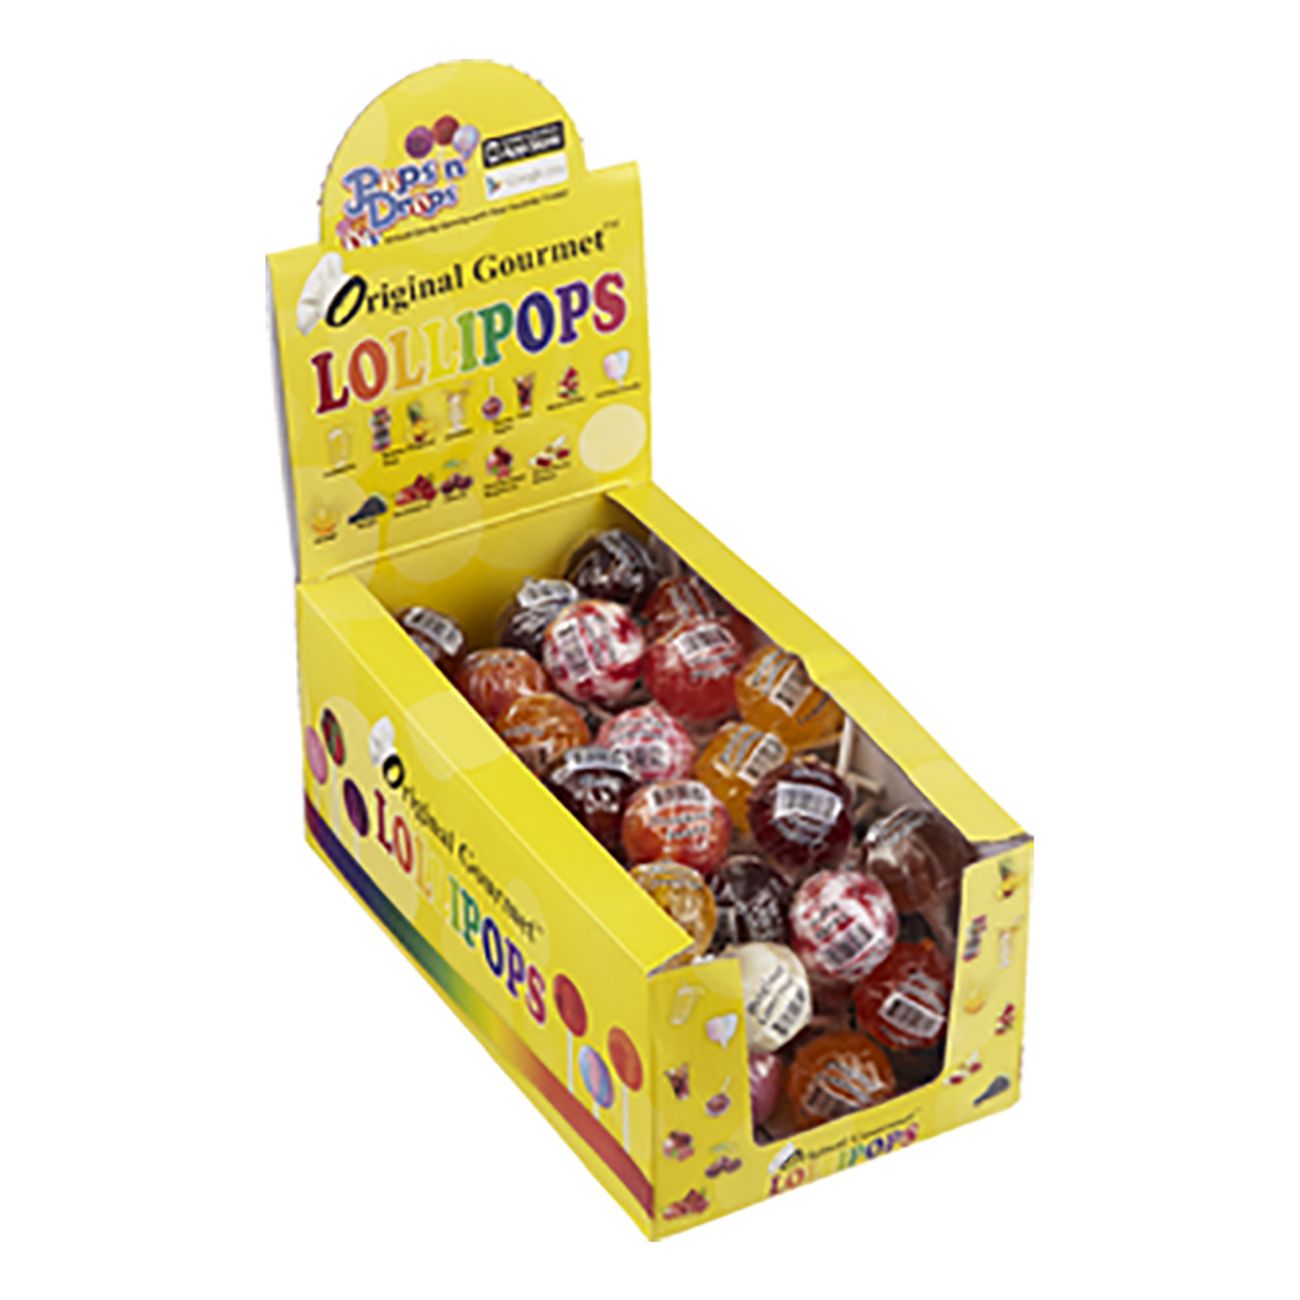 original-gourmet-lollipops-storpack-79811-1